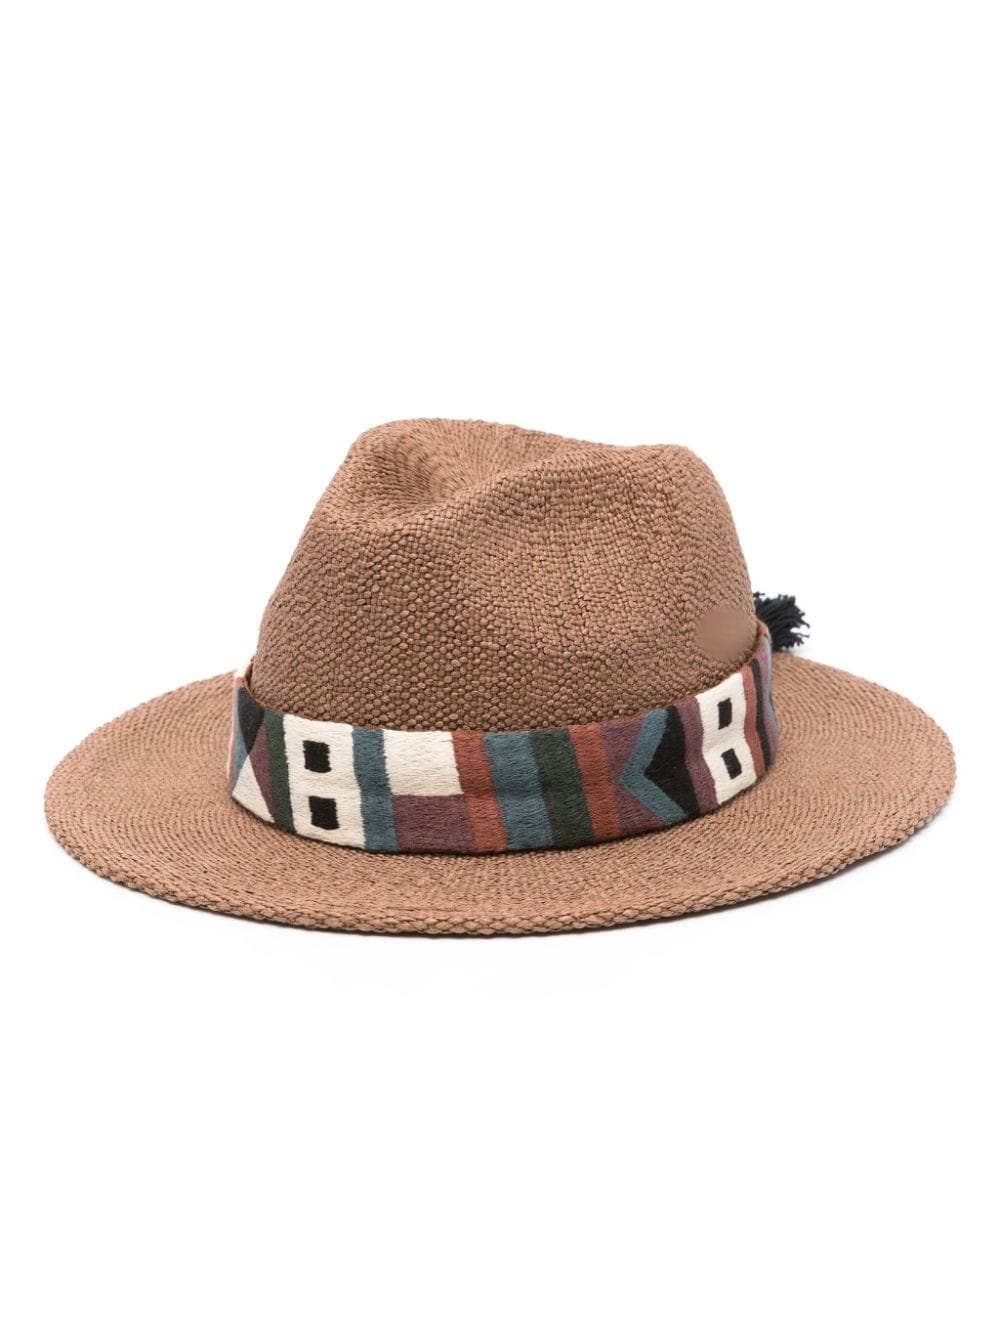 Ignacio wicker hat - 1